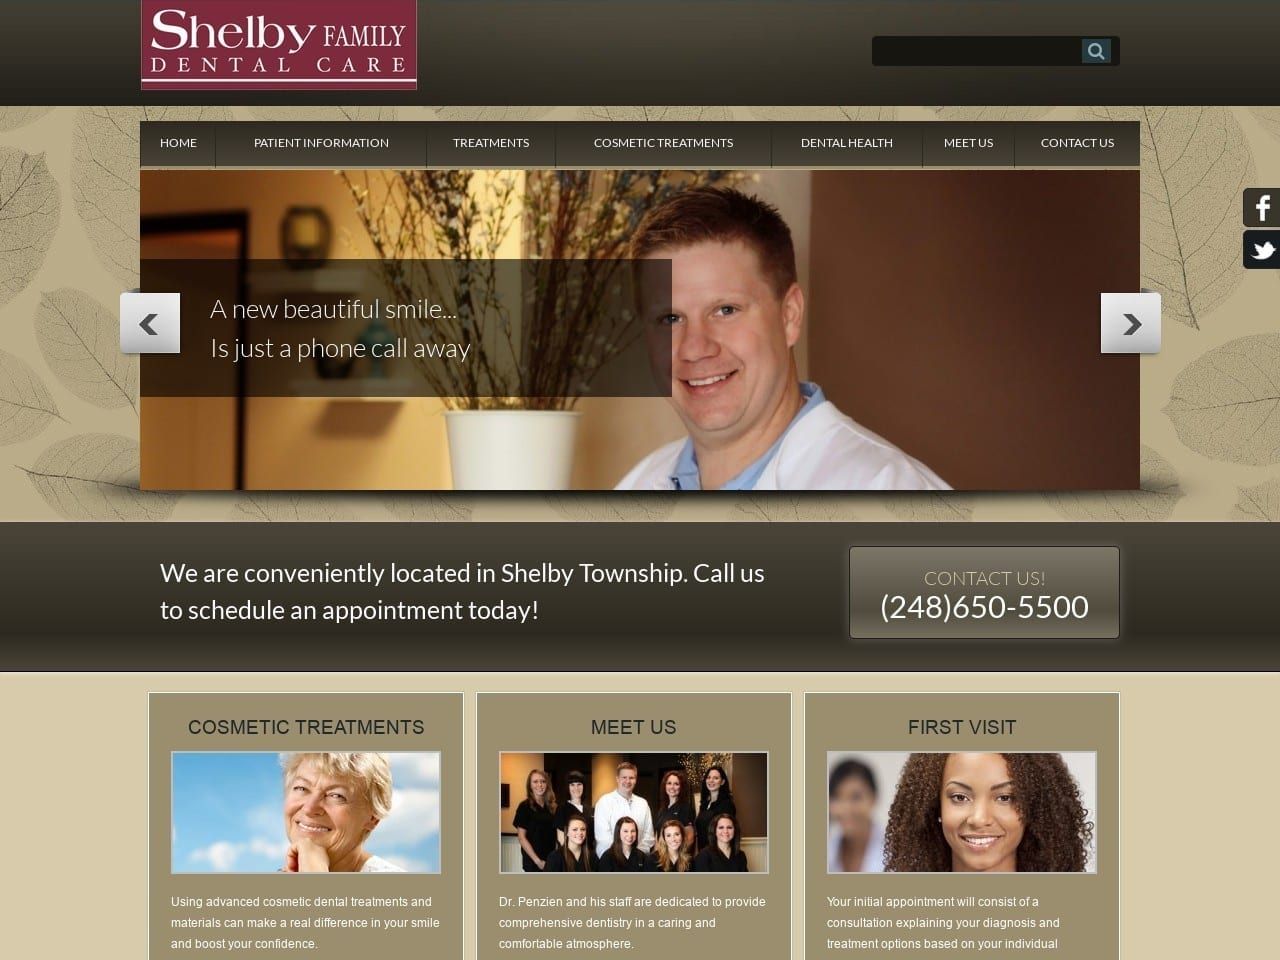 Shelby Family Dental Care Website Screenshot from shelbyfamilydentalcare.com